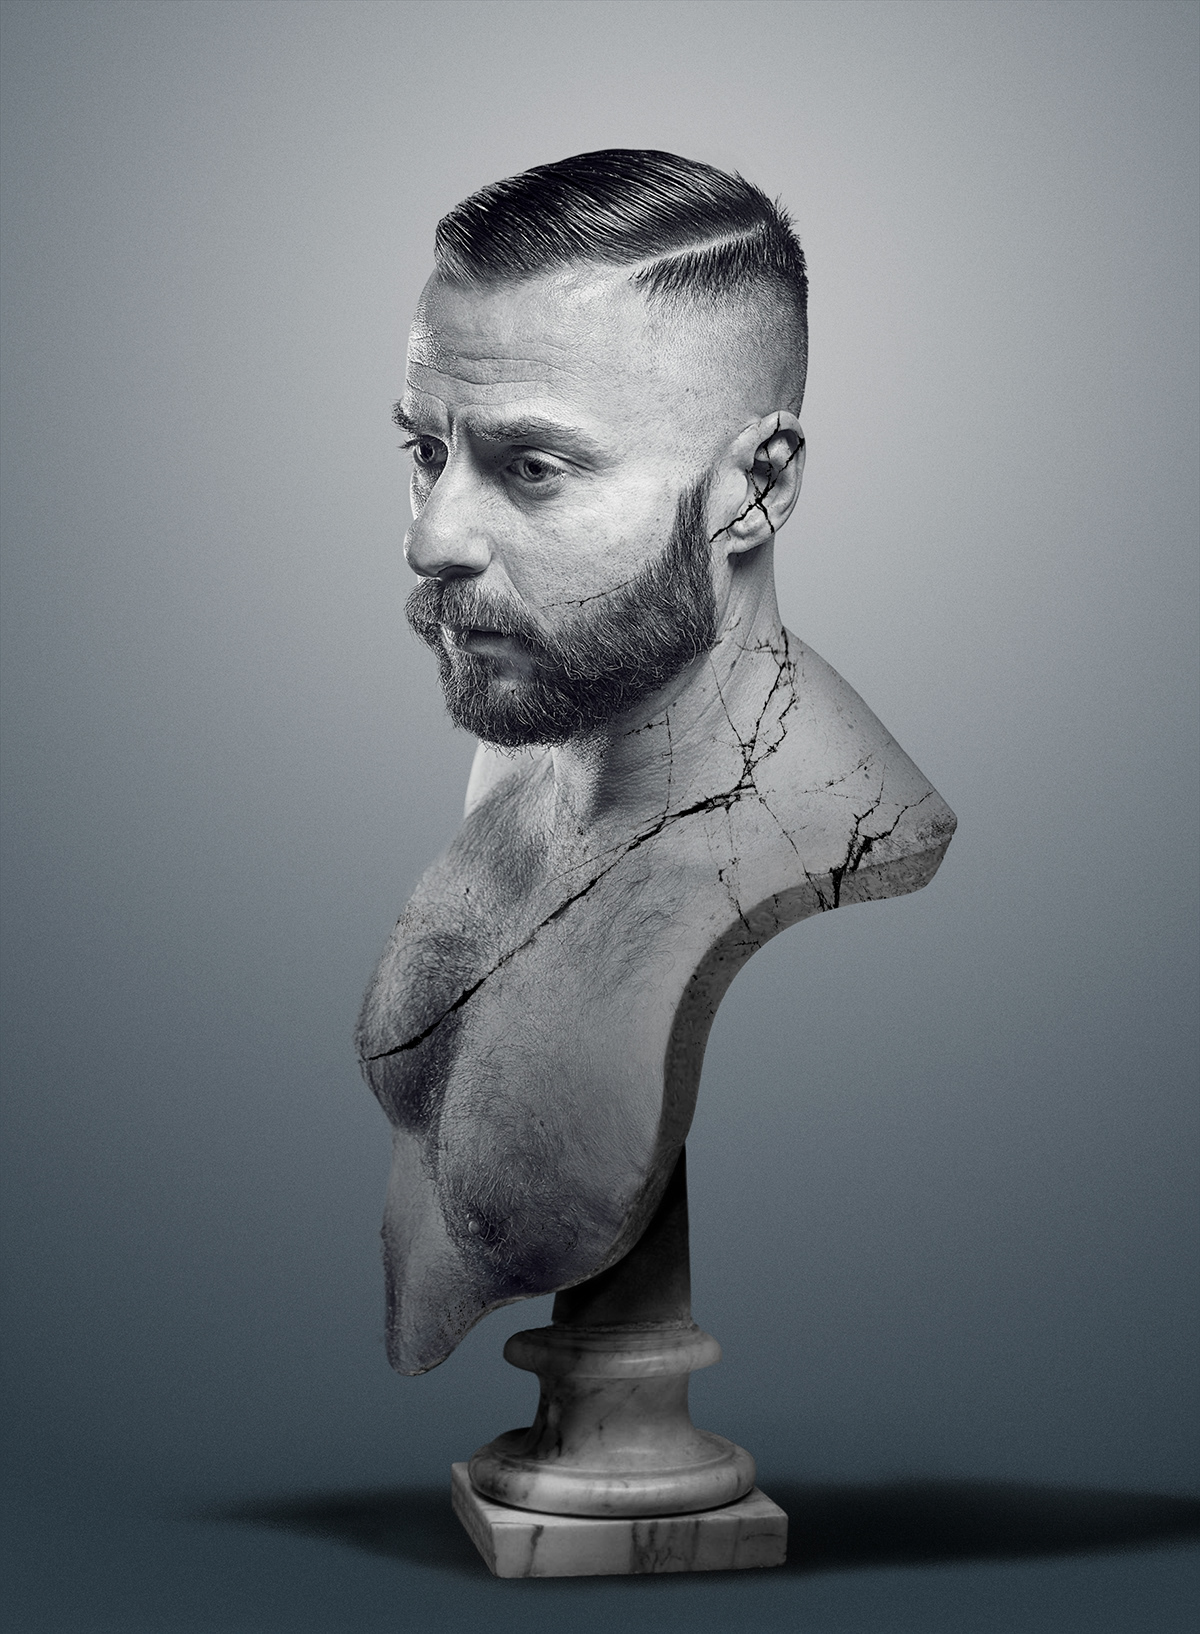 sculpture man portrait Style studio shooting hair Fashion  moda b&w